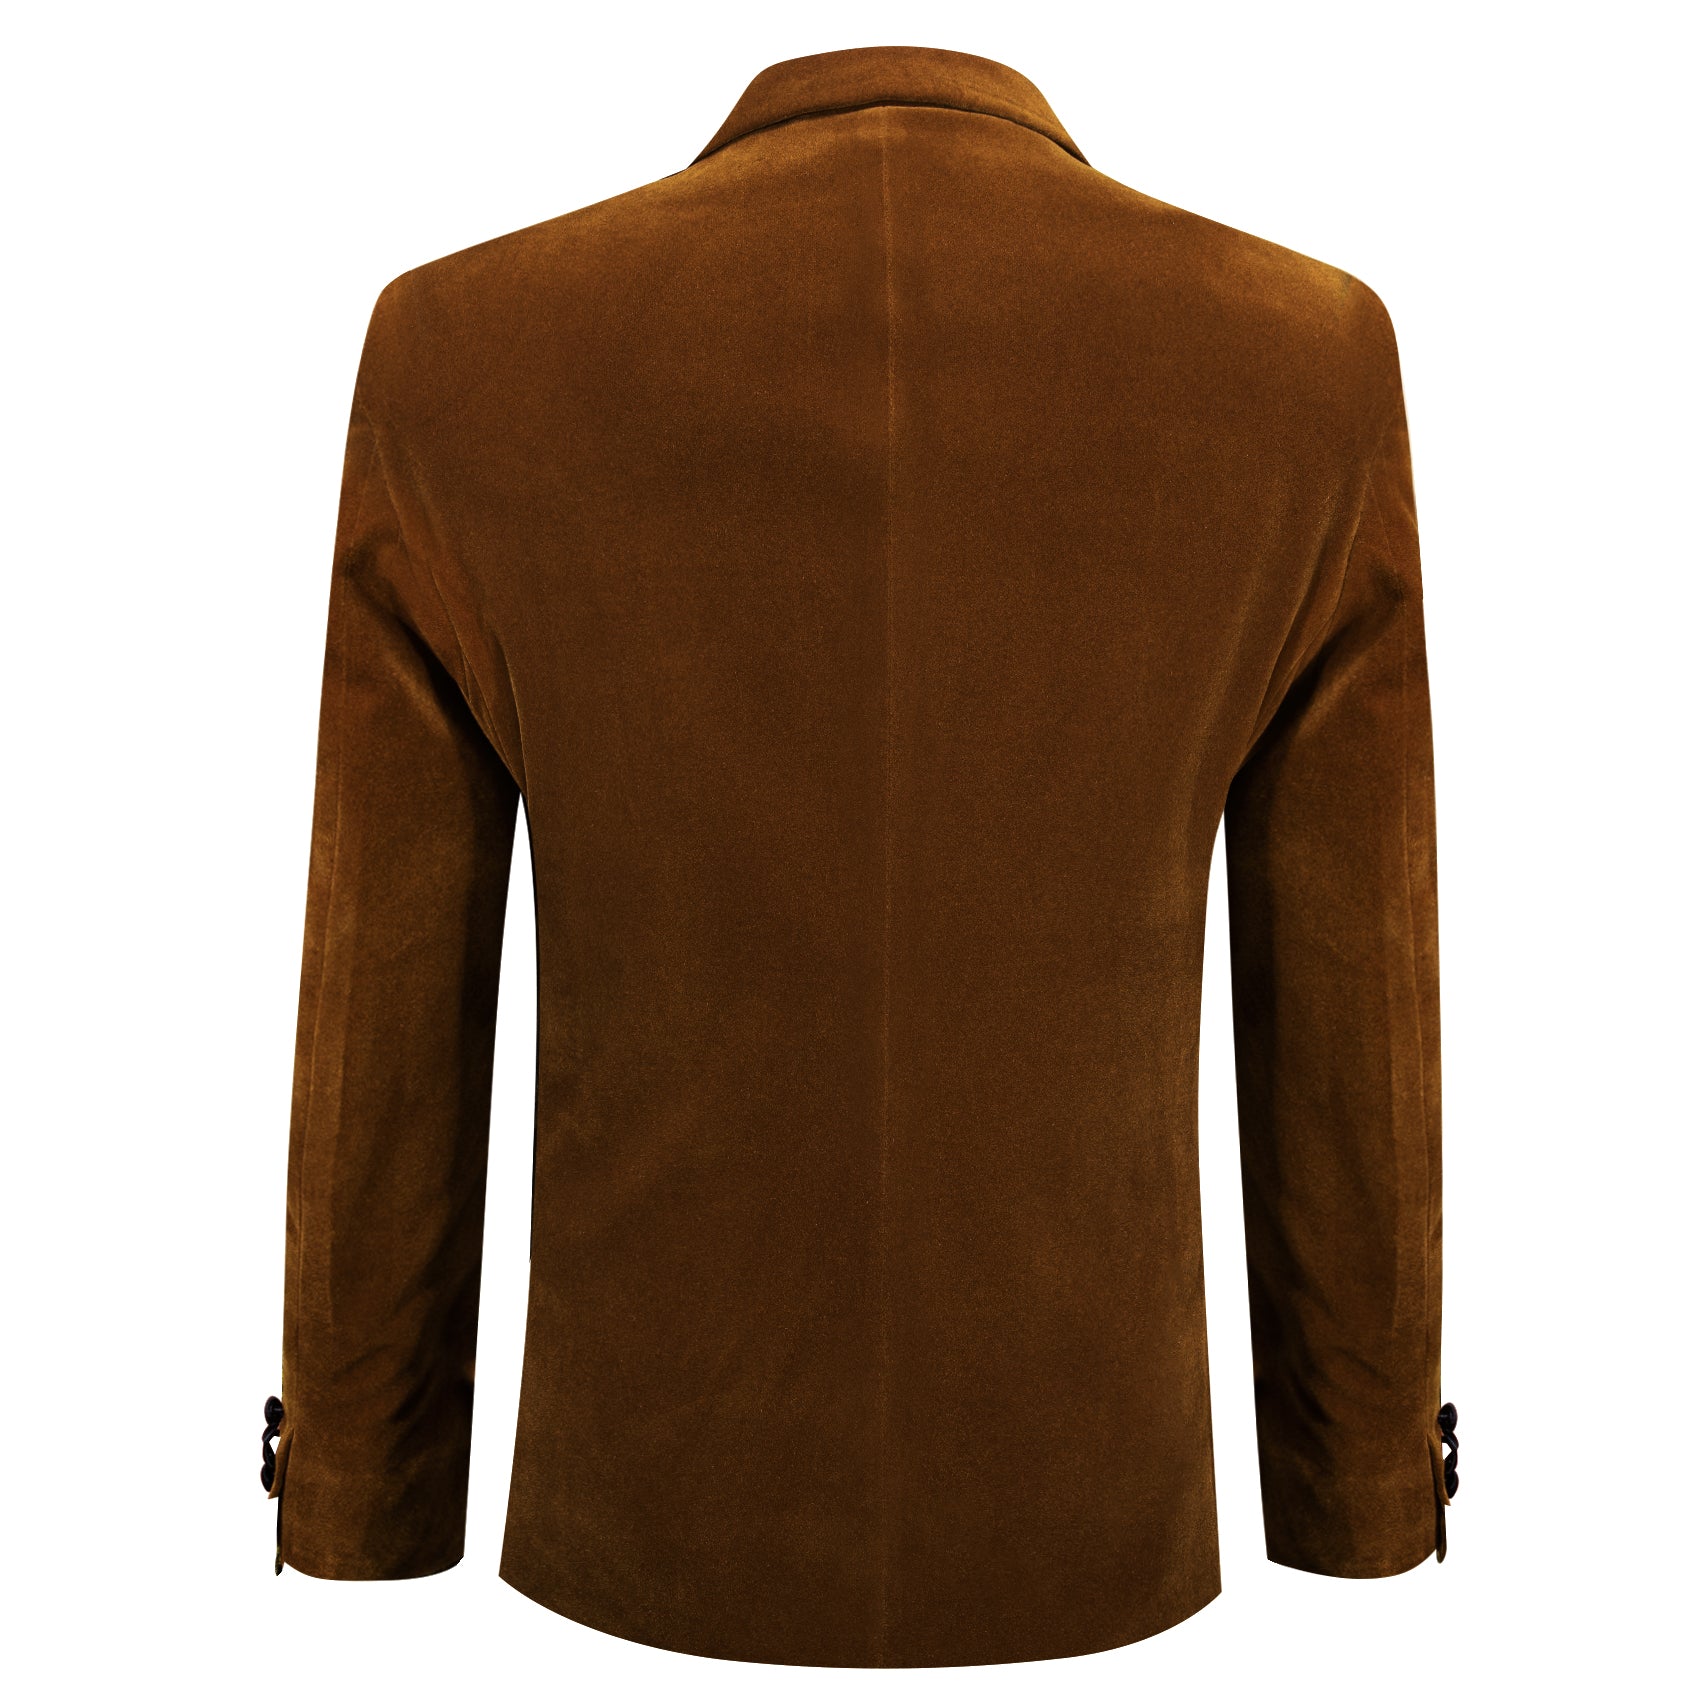 Barry.wang Men's Suit Chocolate Brown Solid Silk Peak Collar Suit Classic